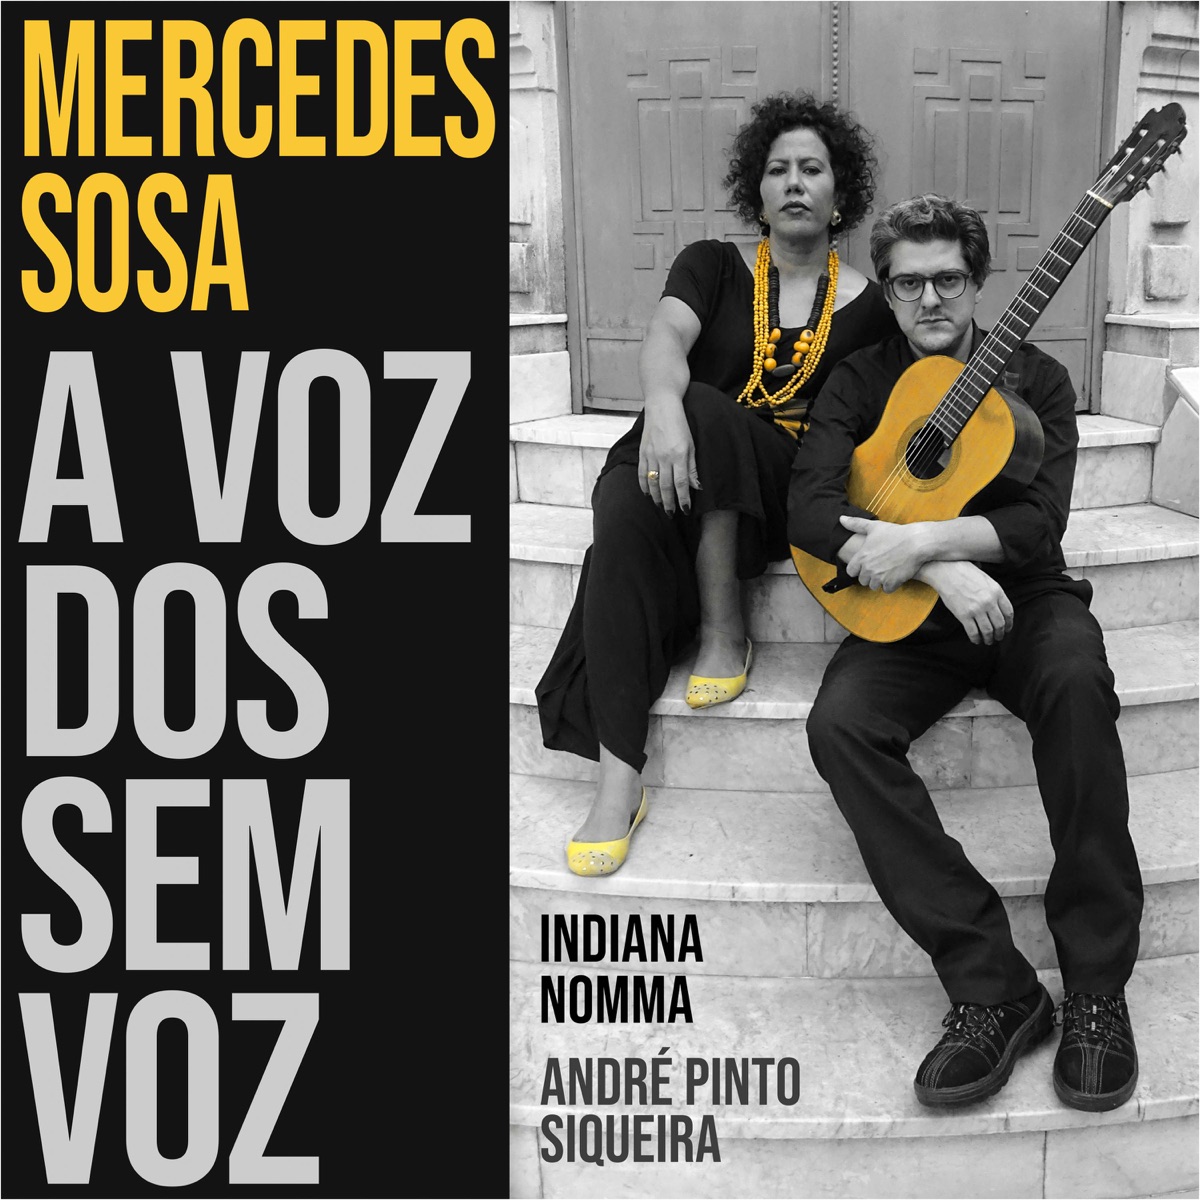 Mercedes Sosa: Dale tu mano al índio. Manaus  - Site Taquiprati